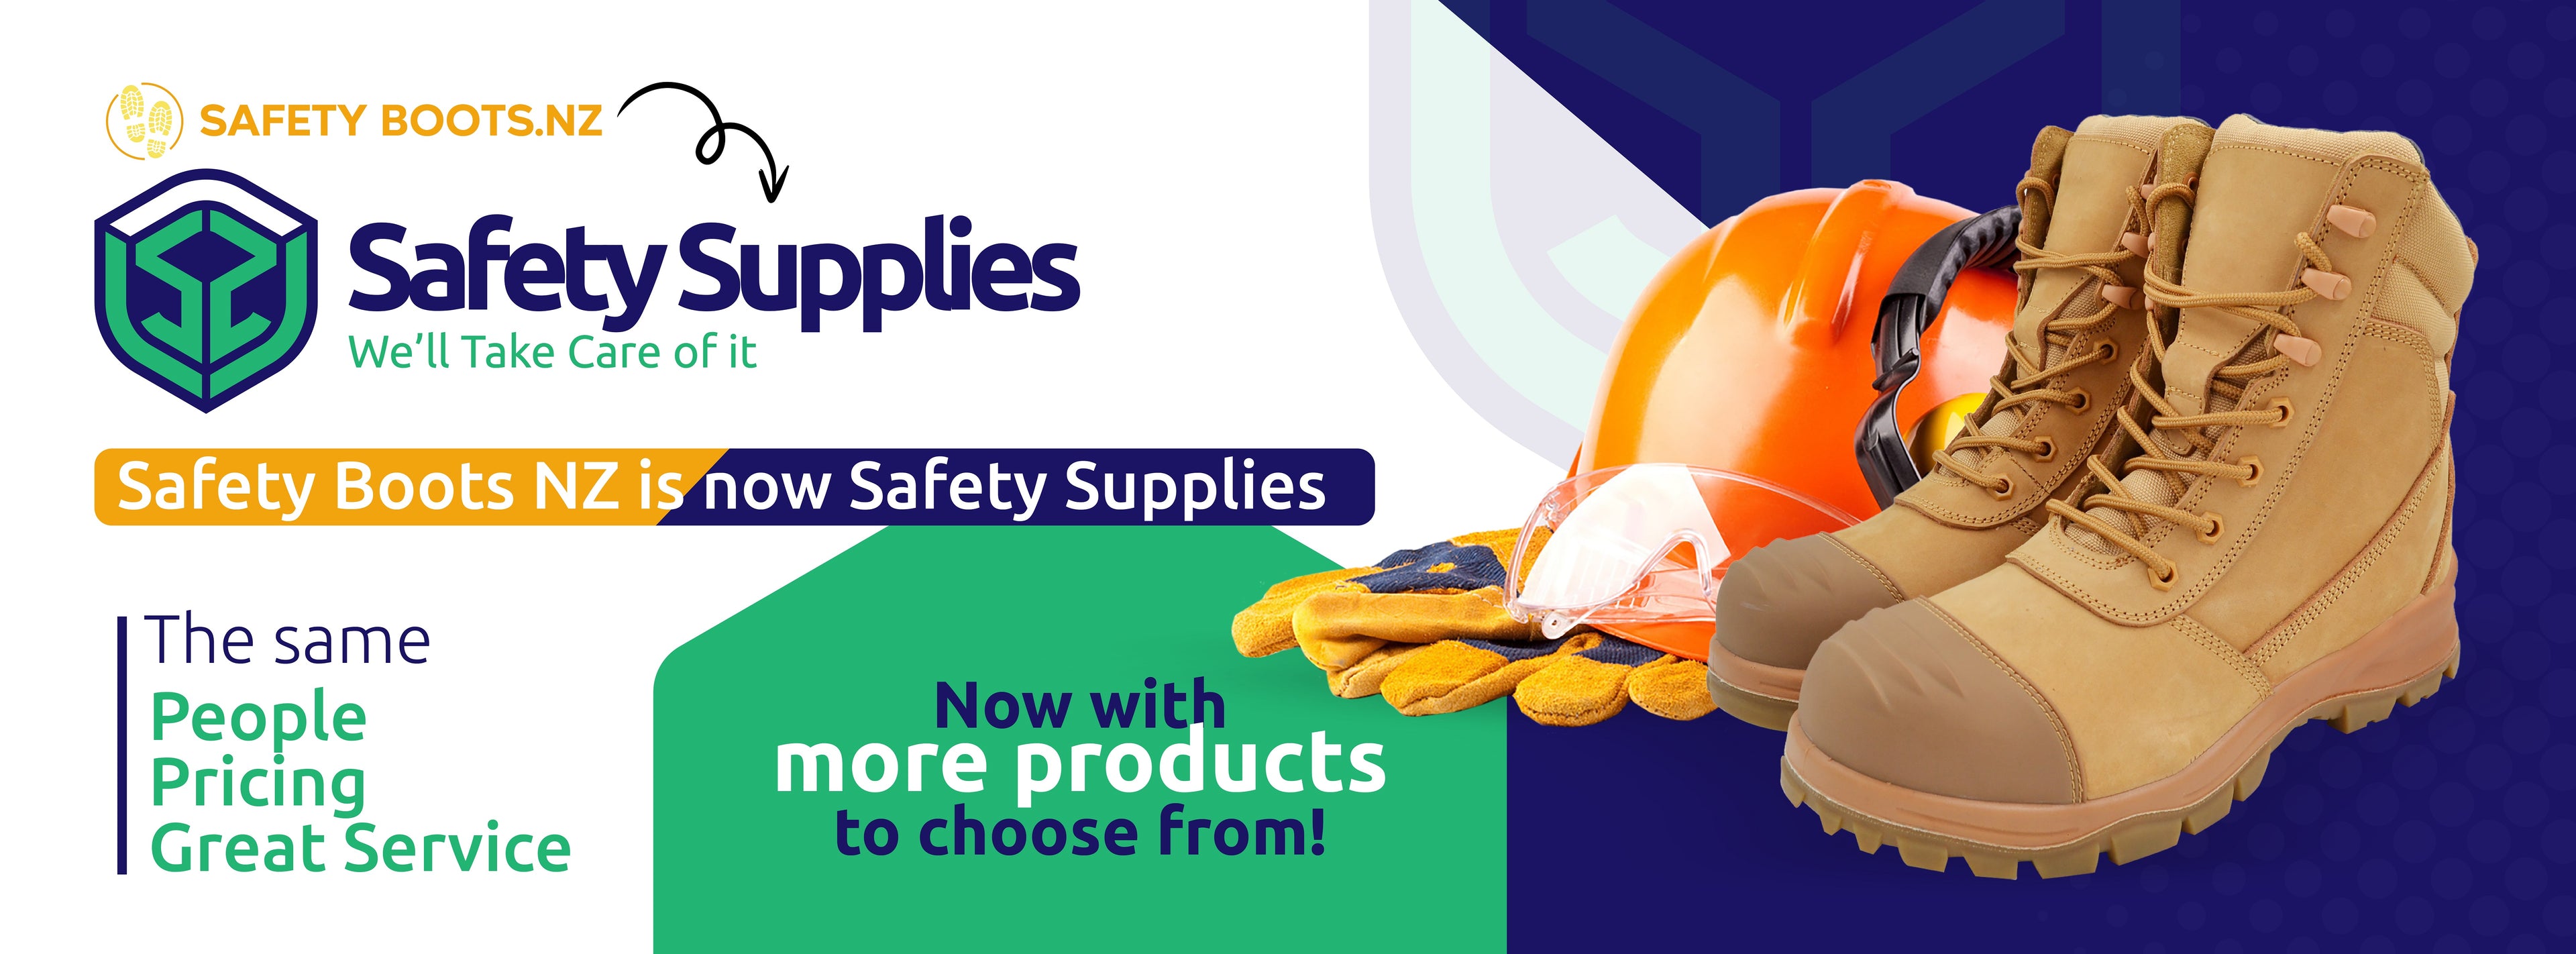 Safety Supplies | safety boots nz 